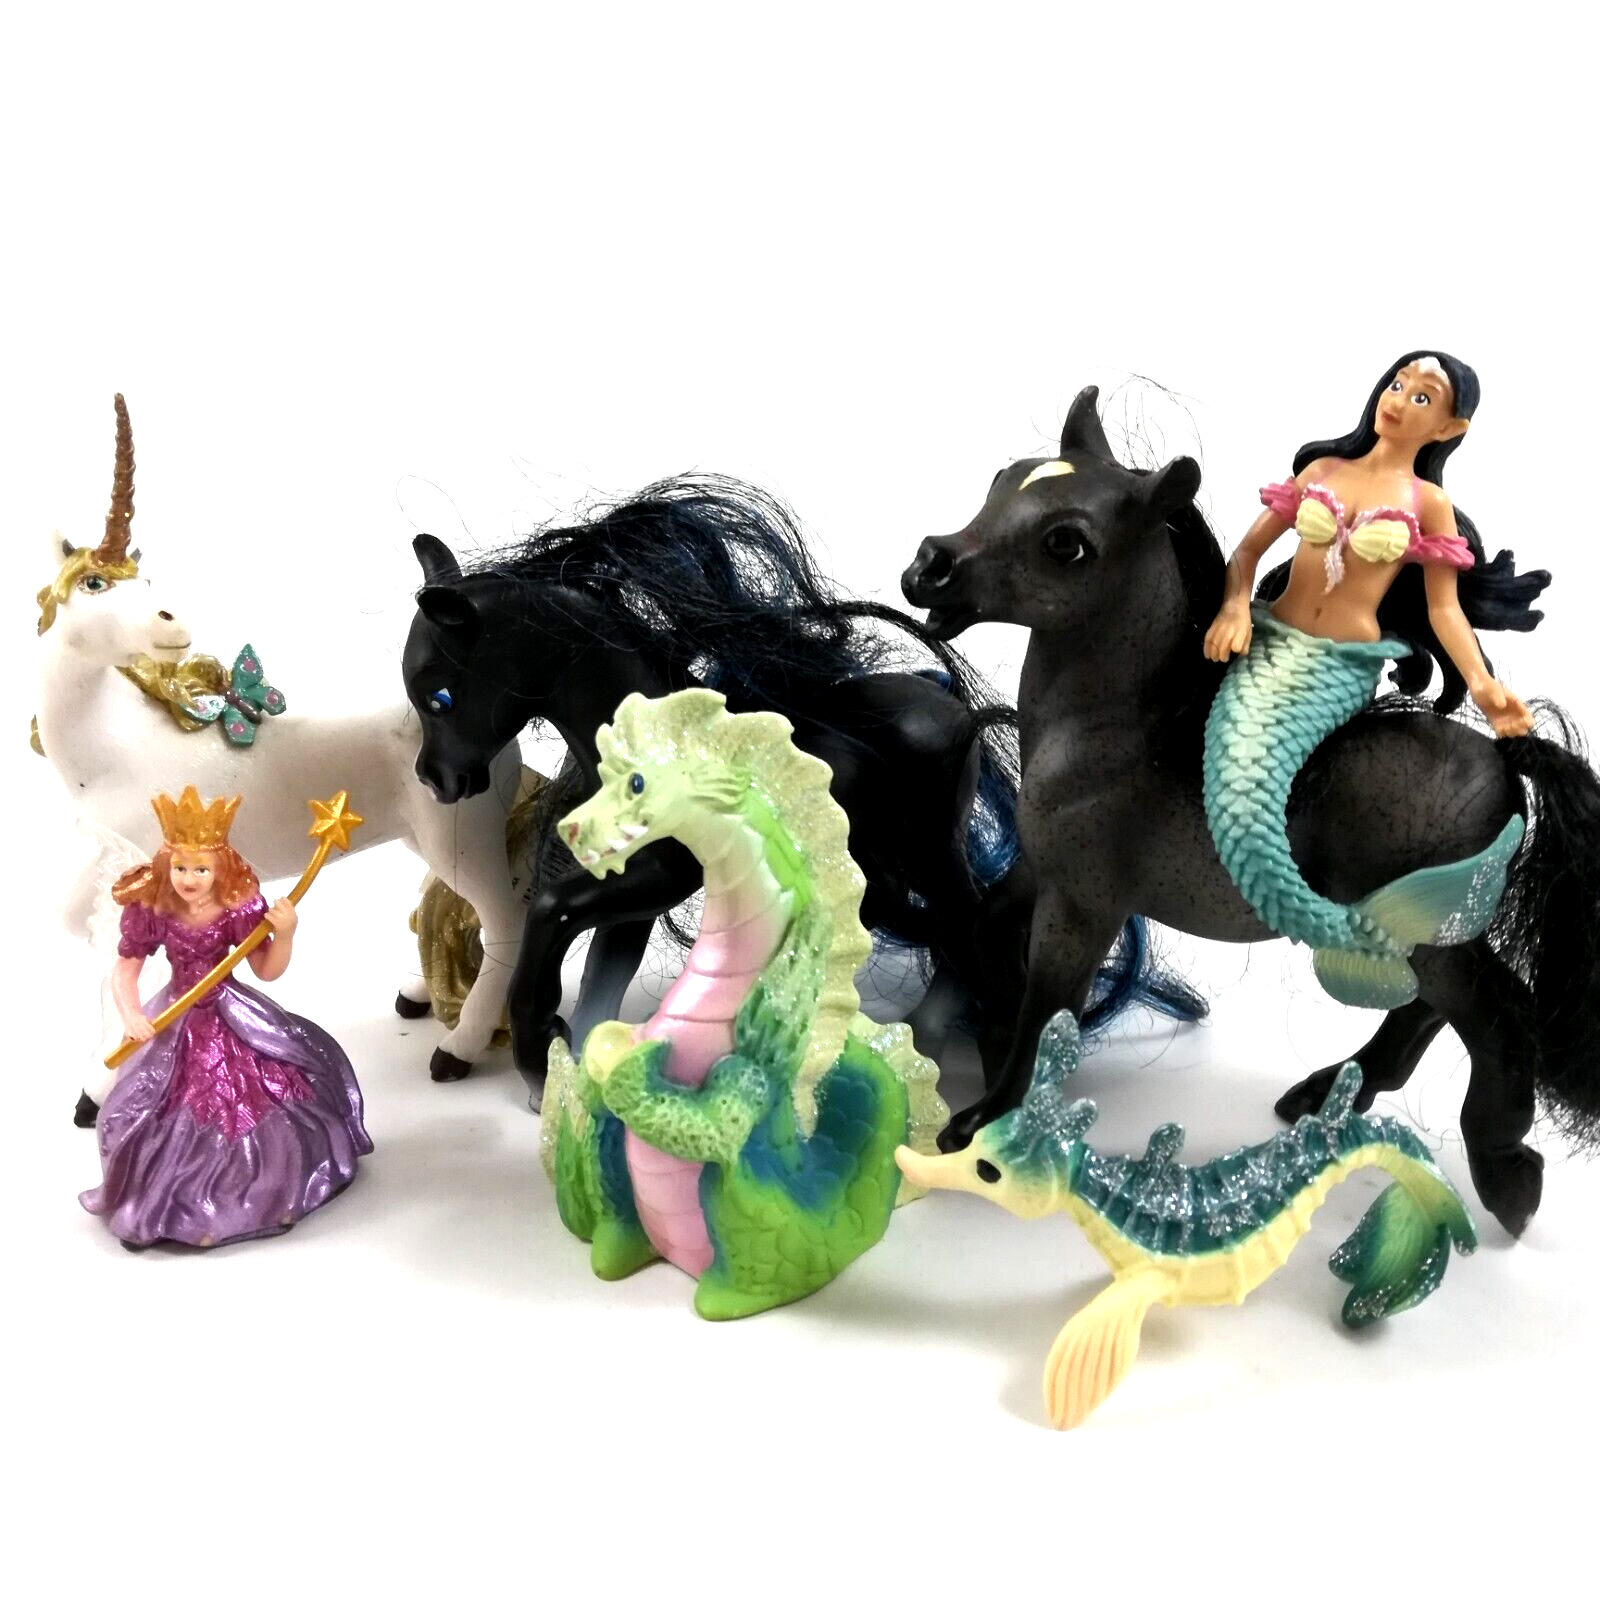 Breyer Horses Schleich Mermaid Papo Unicorn Fairy Dragon Figures & More (7 Pcs)